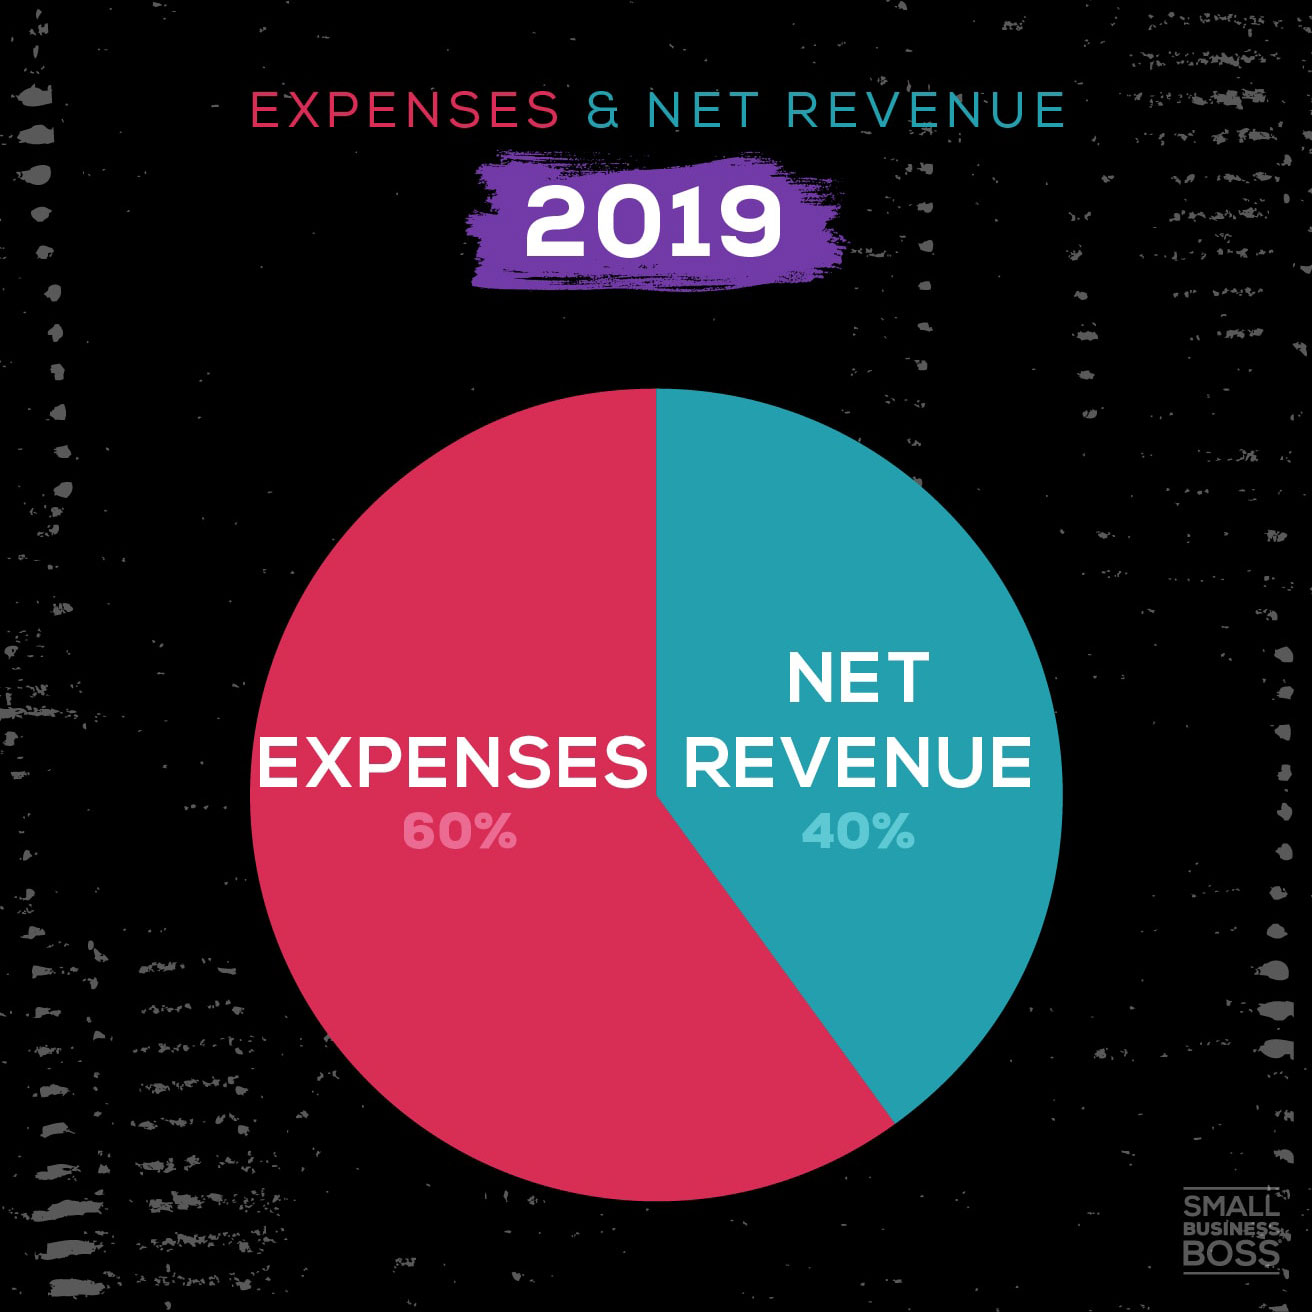 pie chart depicting expenses vs revenue in 2019